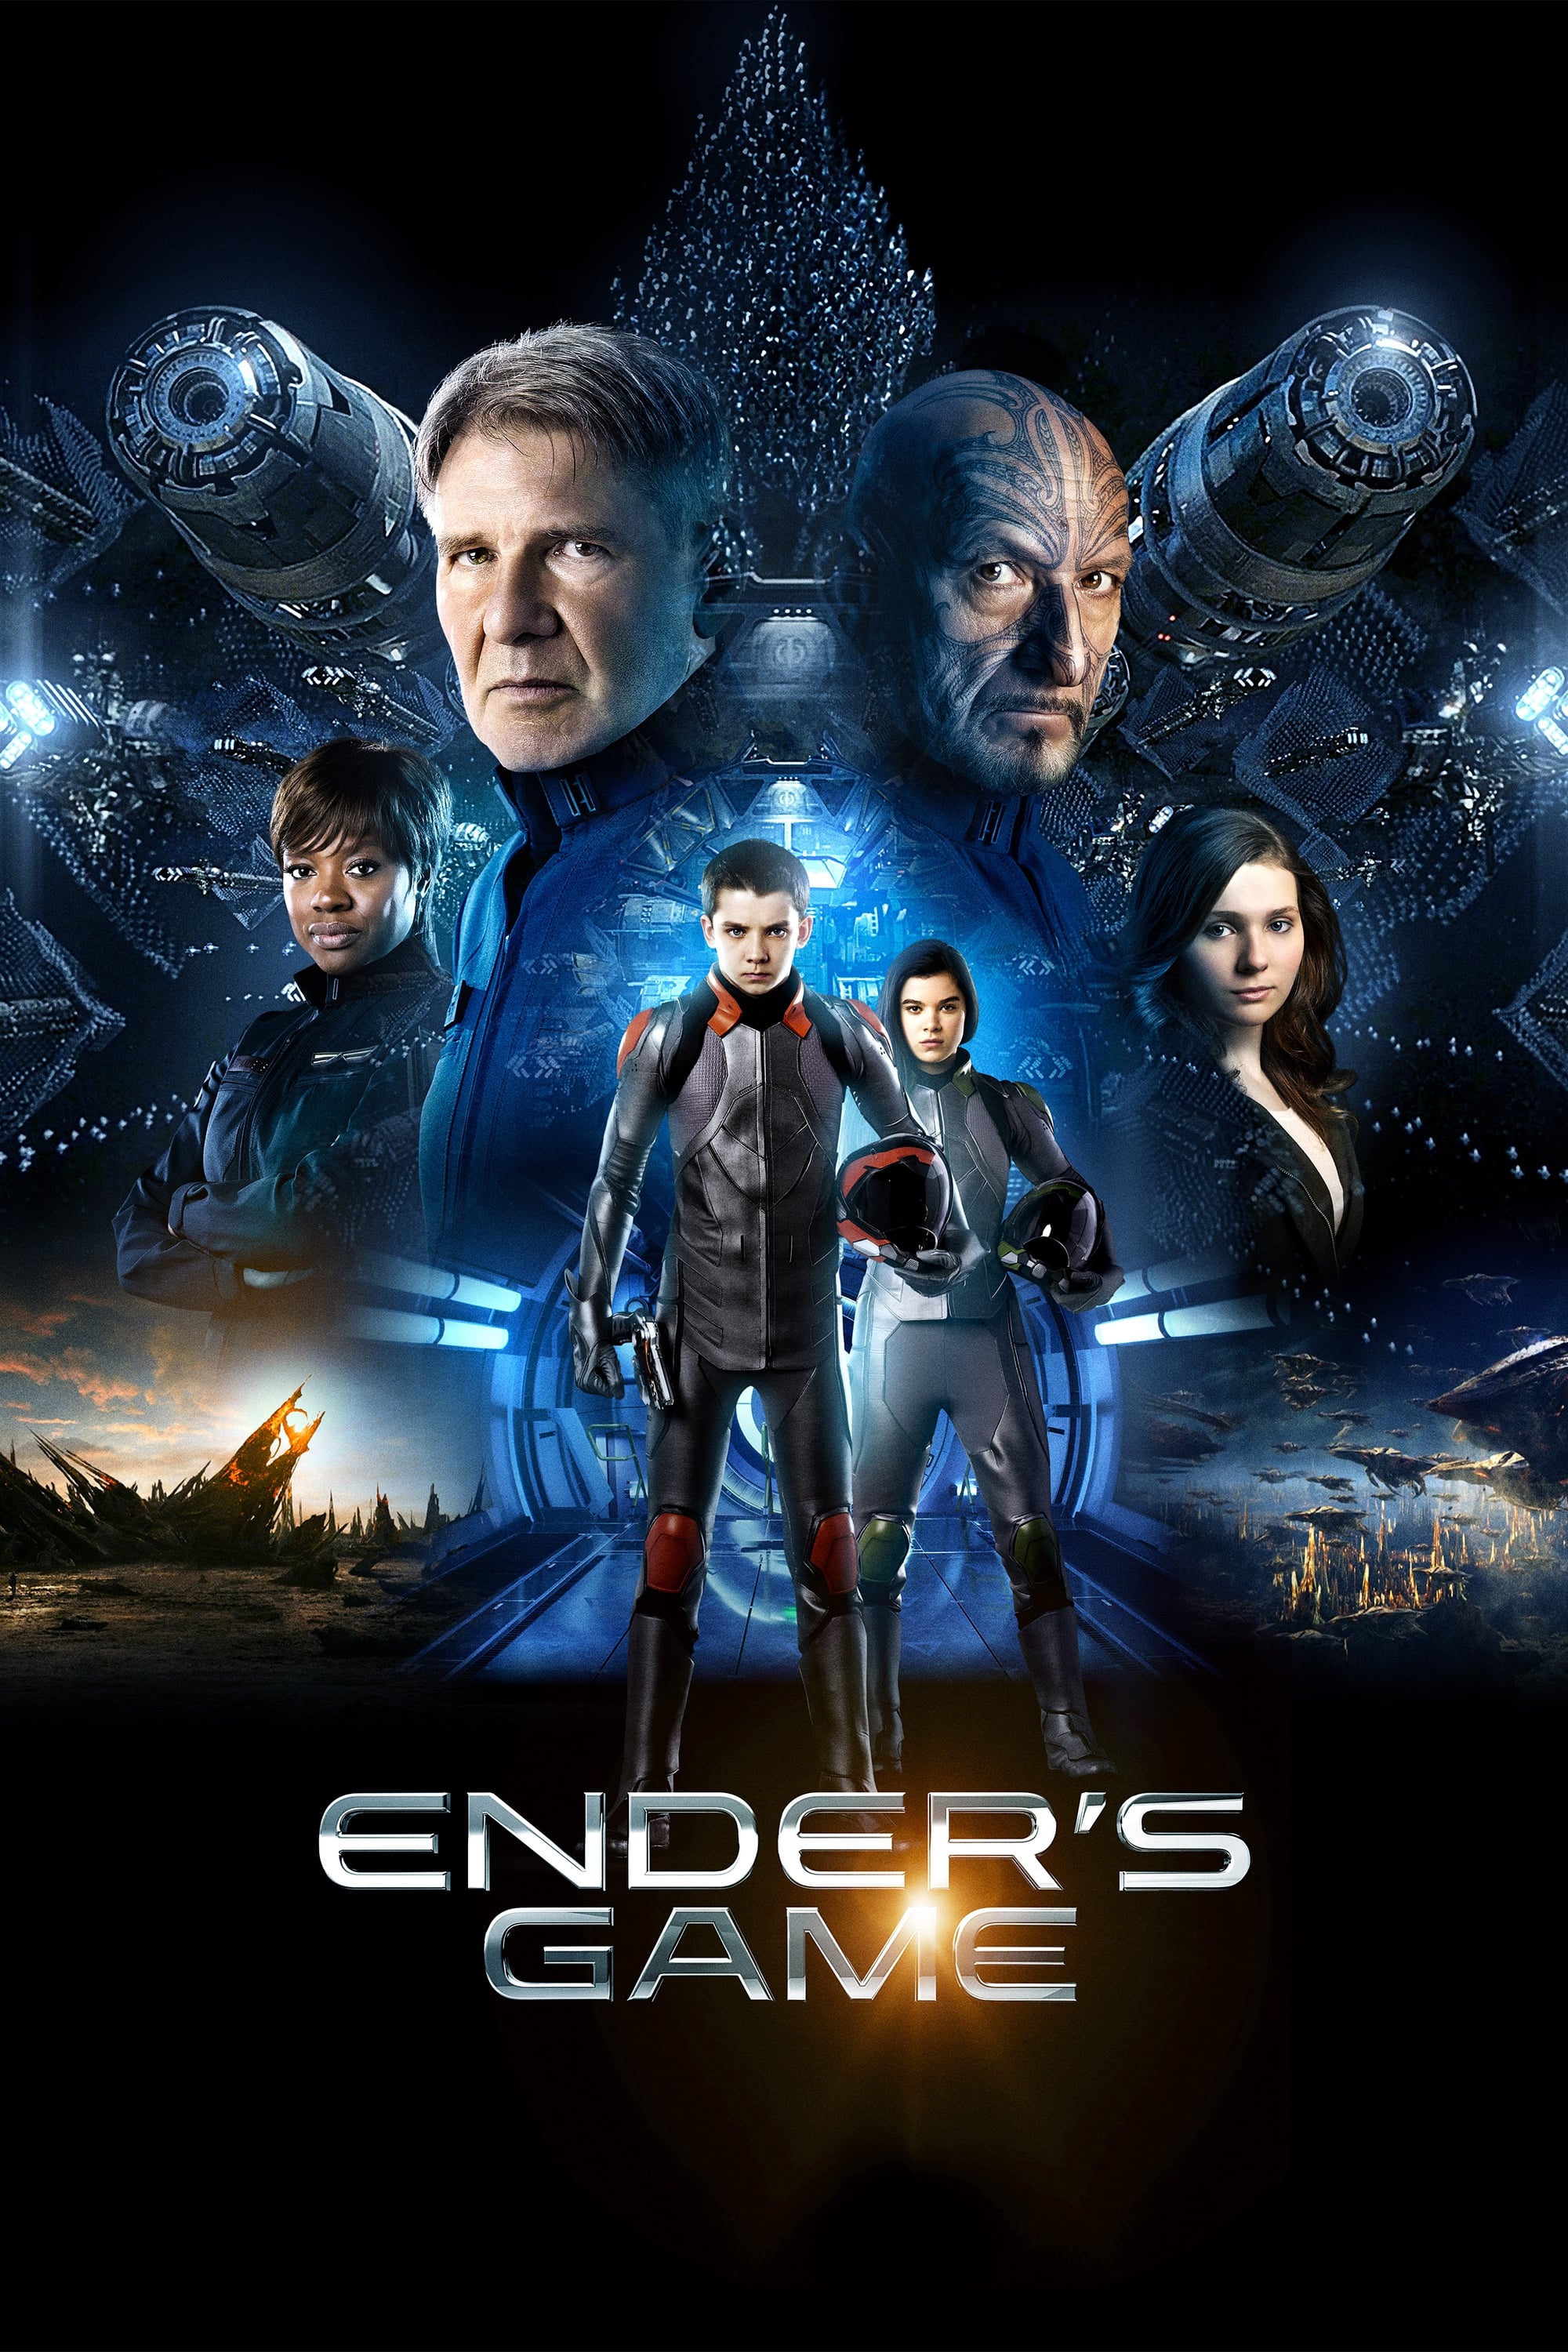 Ender’s Game (2013)